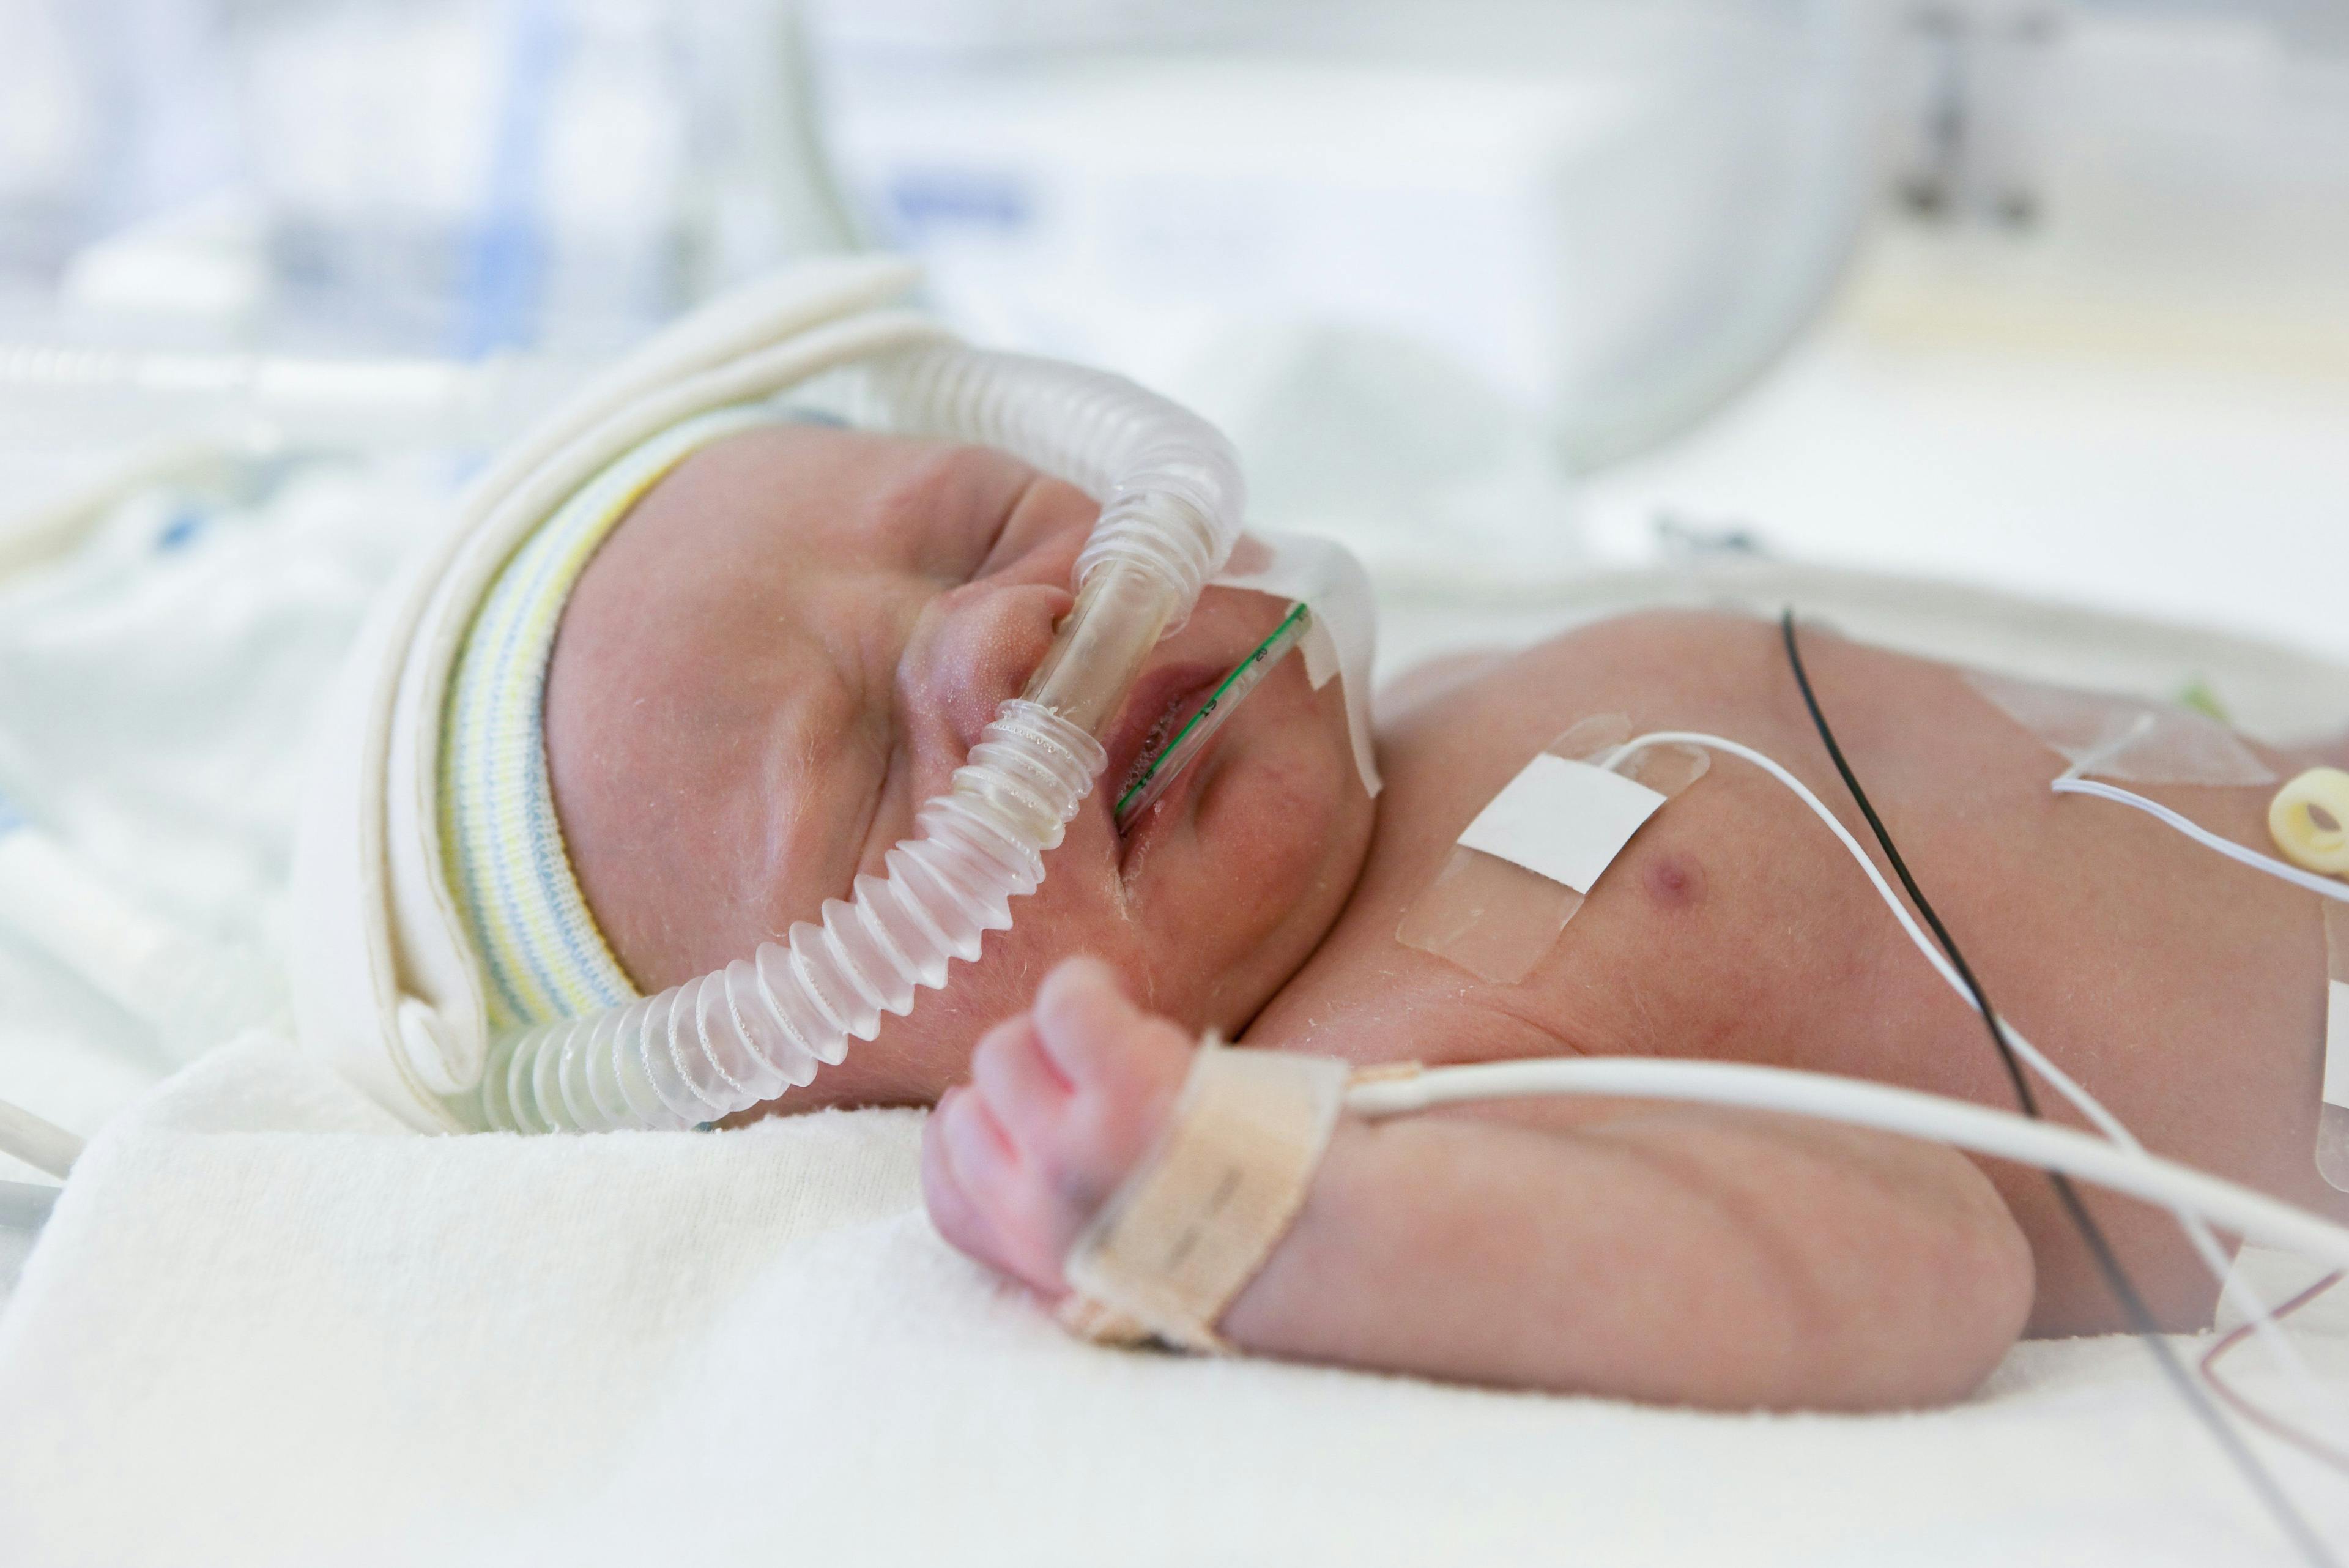 Preemie oxygenation updates lack specific guidance